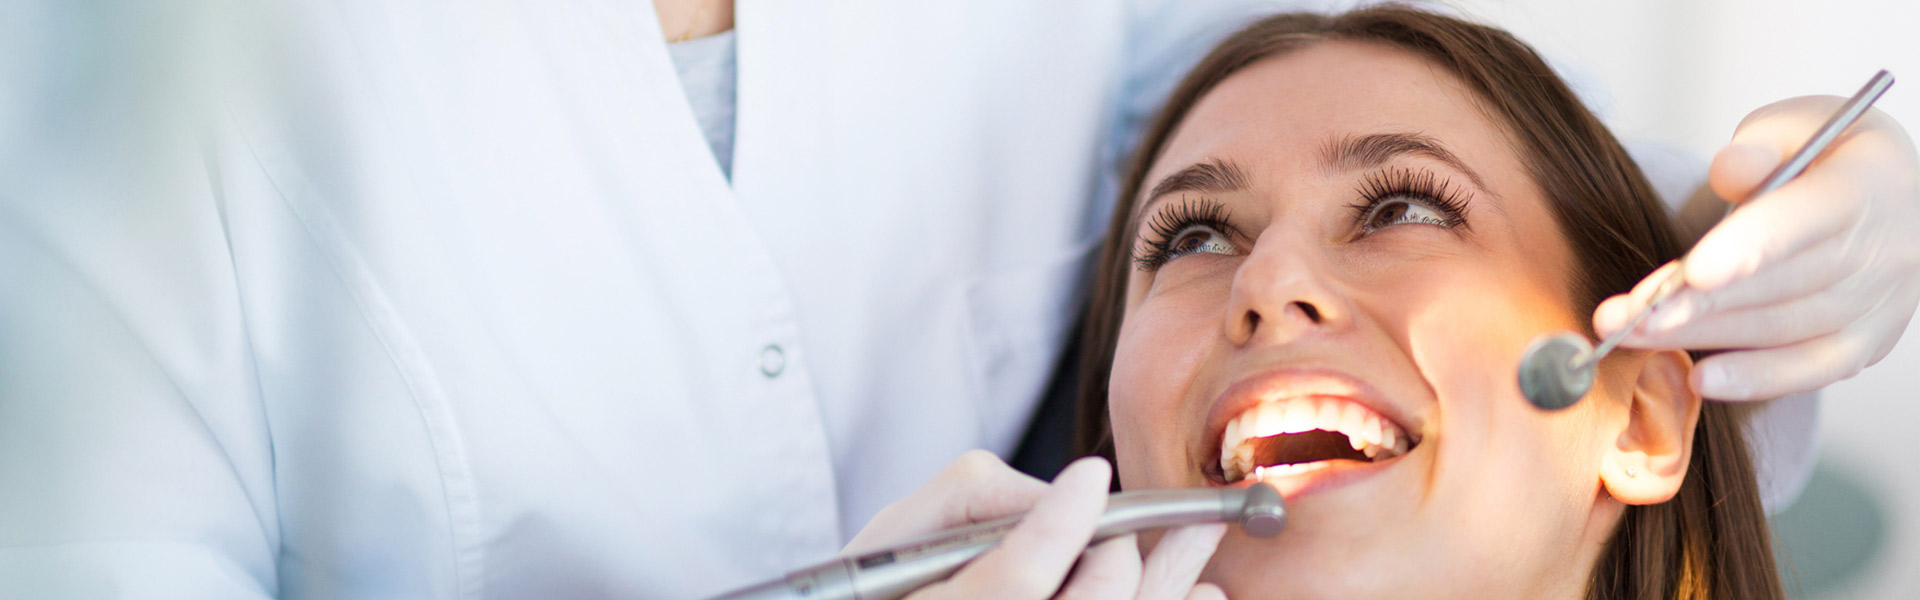 women getting teeth checked by dentist